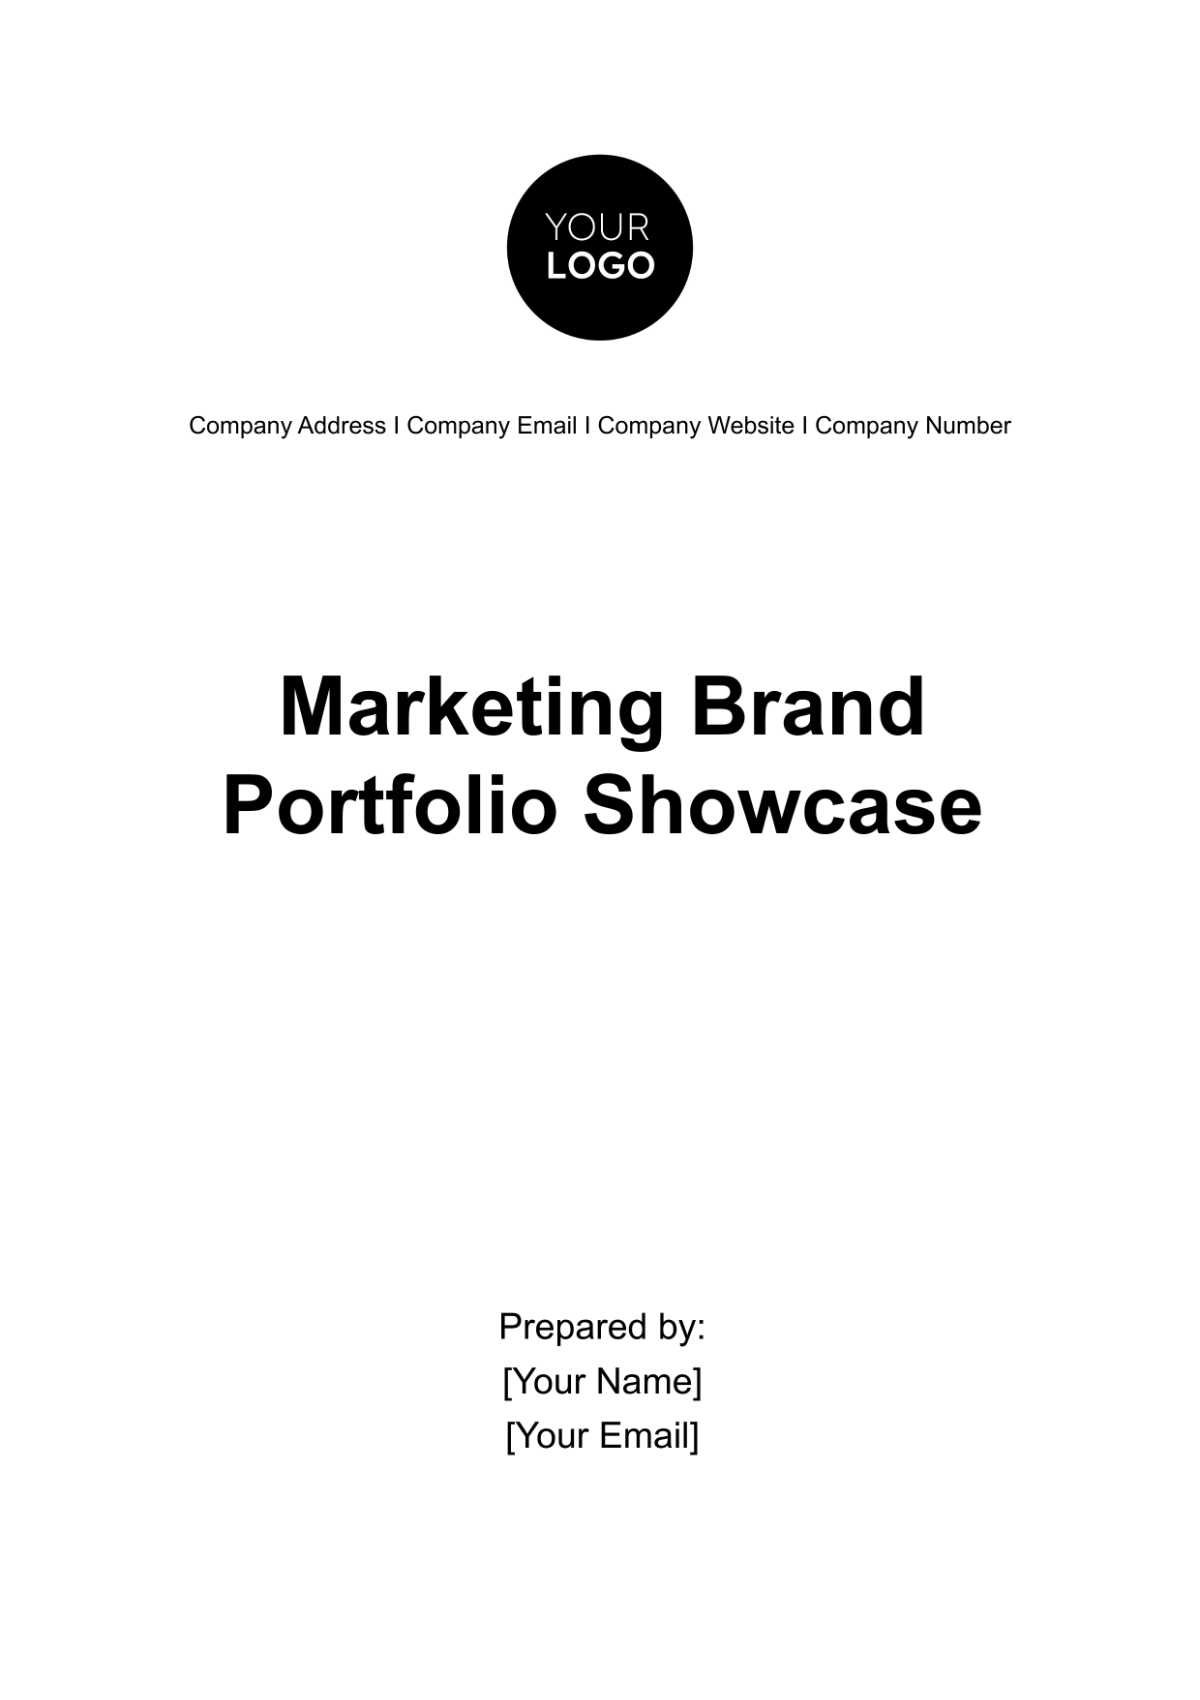 Free Marketing Brand Portfolio Showcase Template